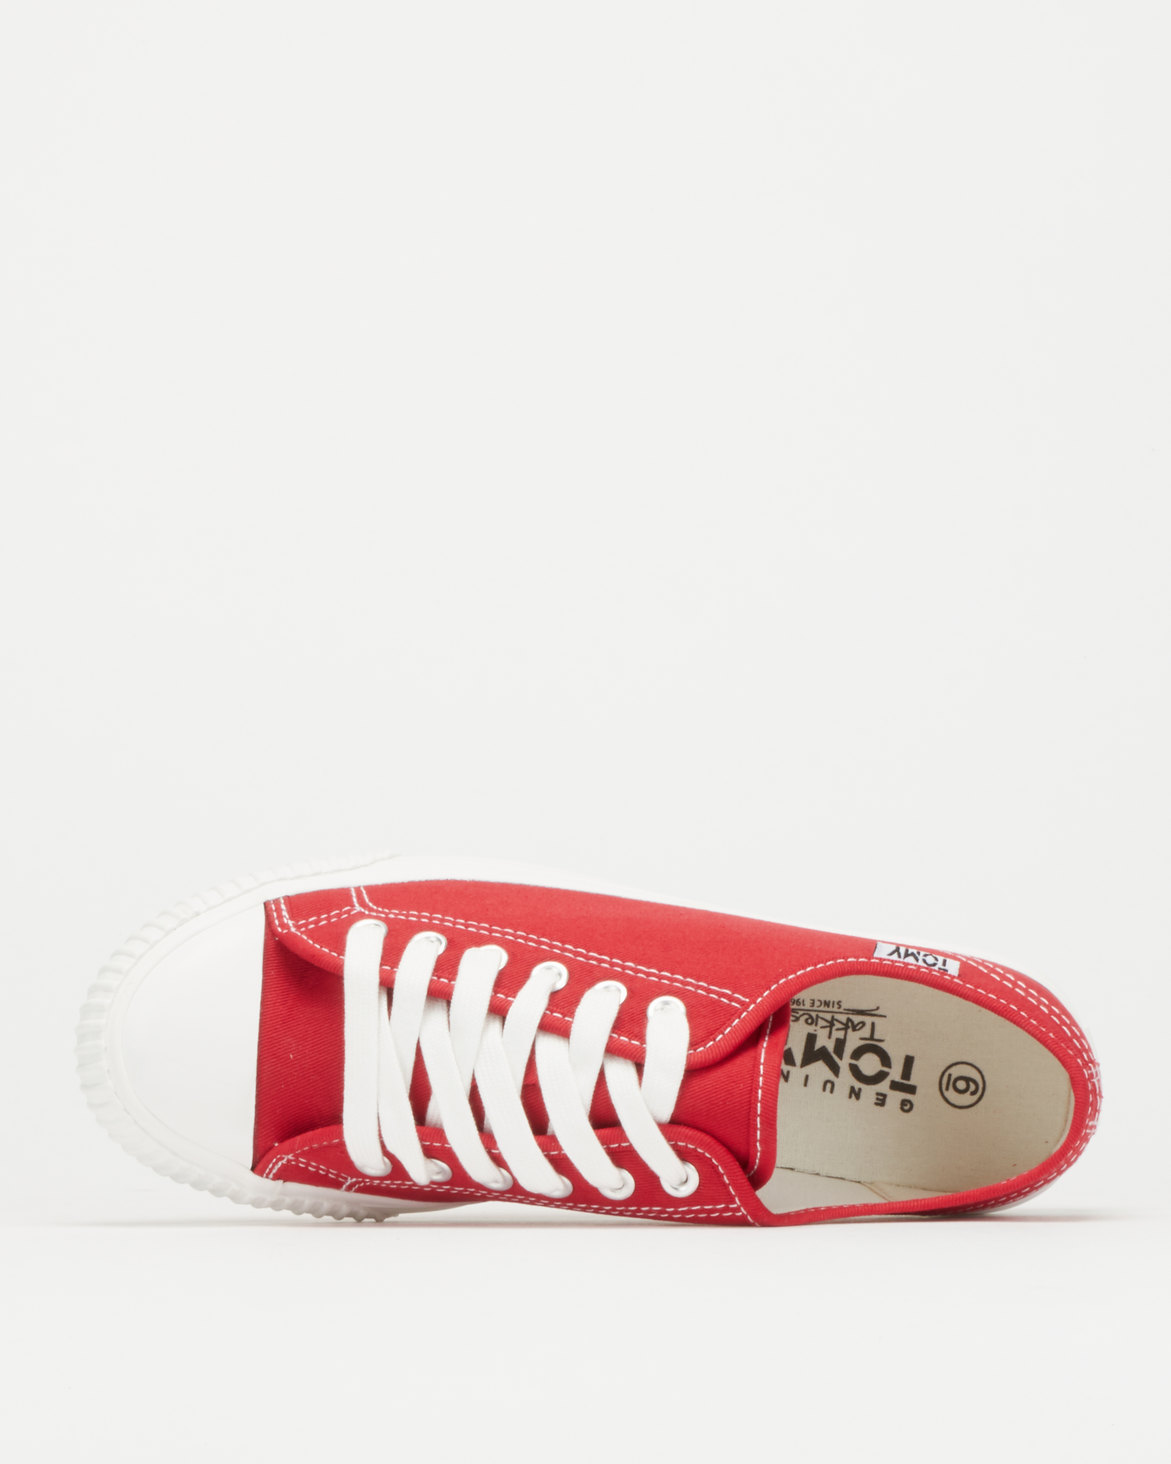 Tomy Takkies Canvas Sneakers Red | Zando